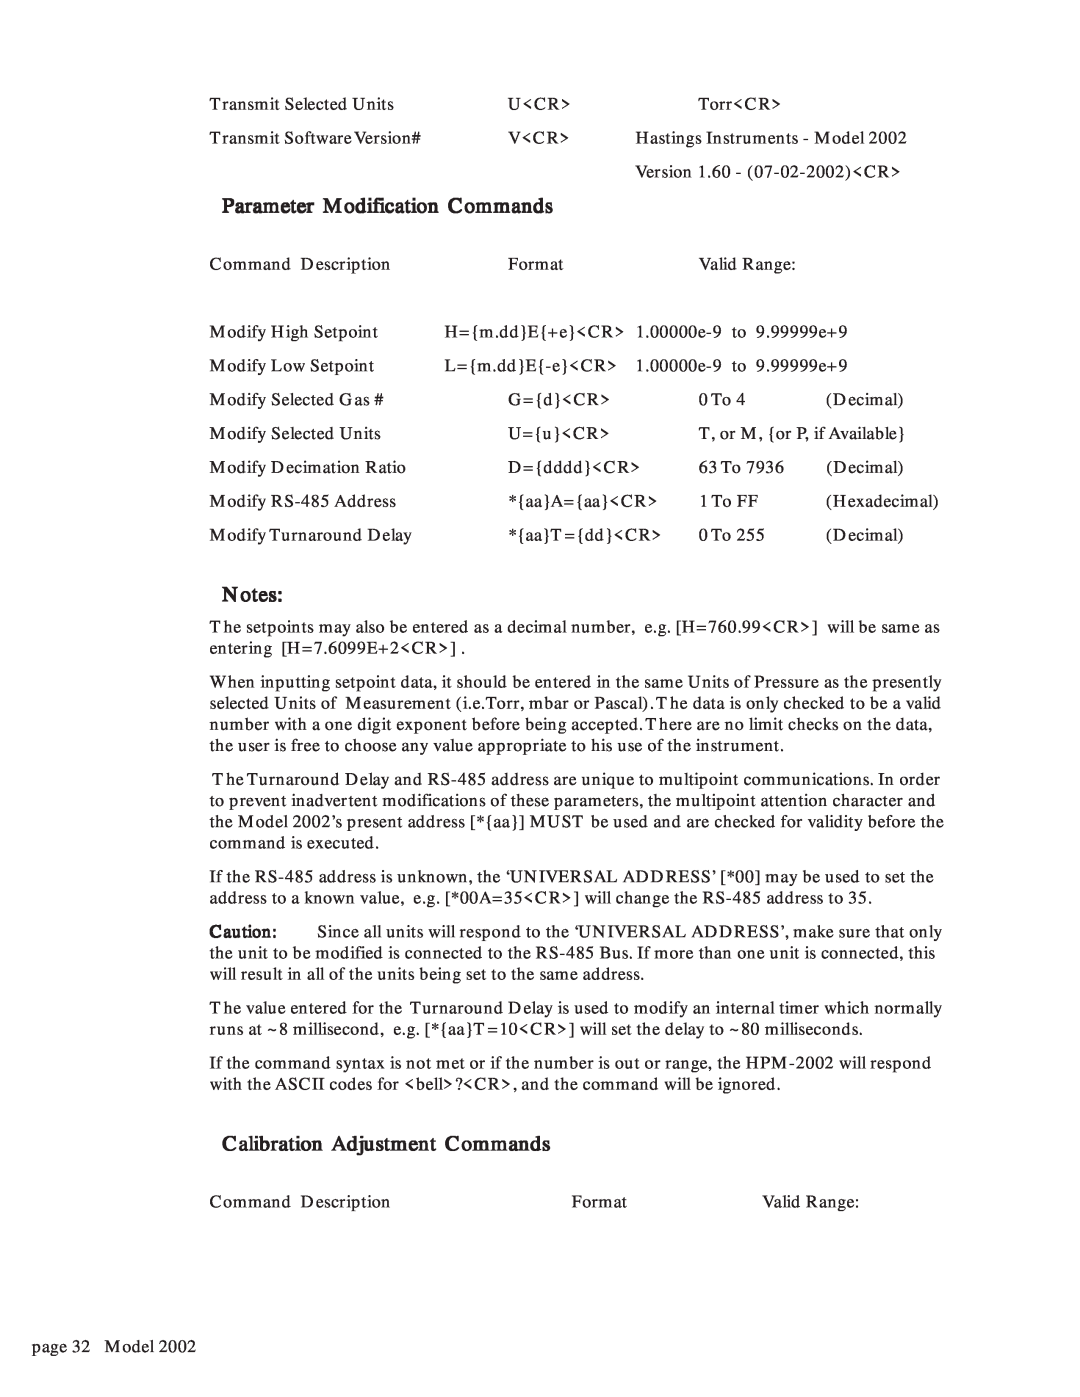 Teledyne 2002 instruction manual Parameter Modification Commands, Calibration Adjustment Commands 